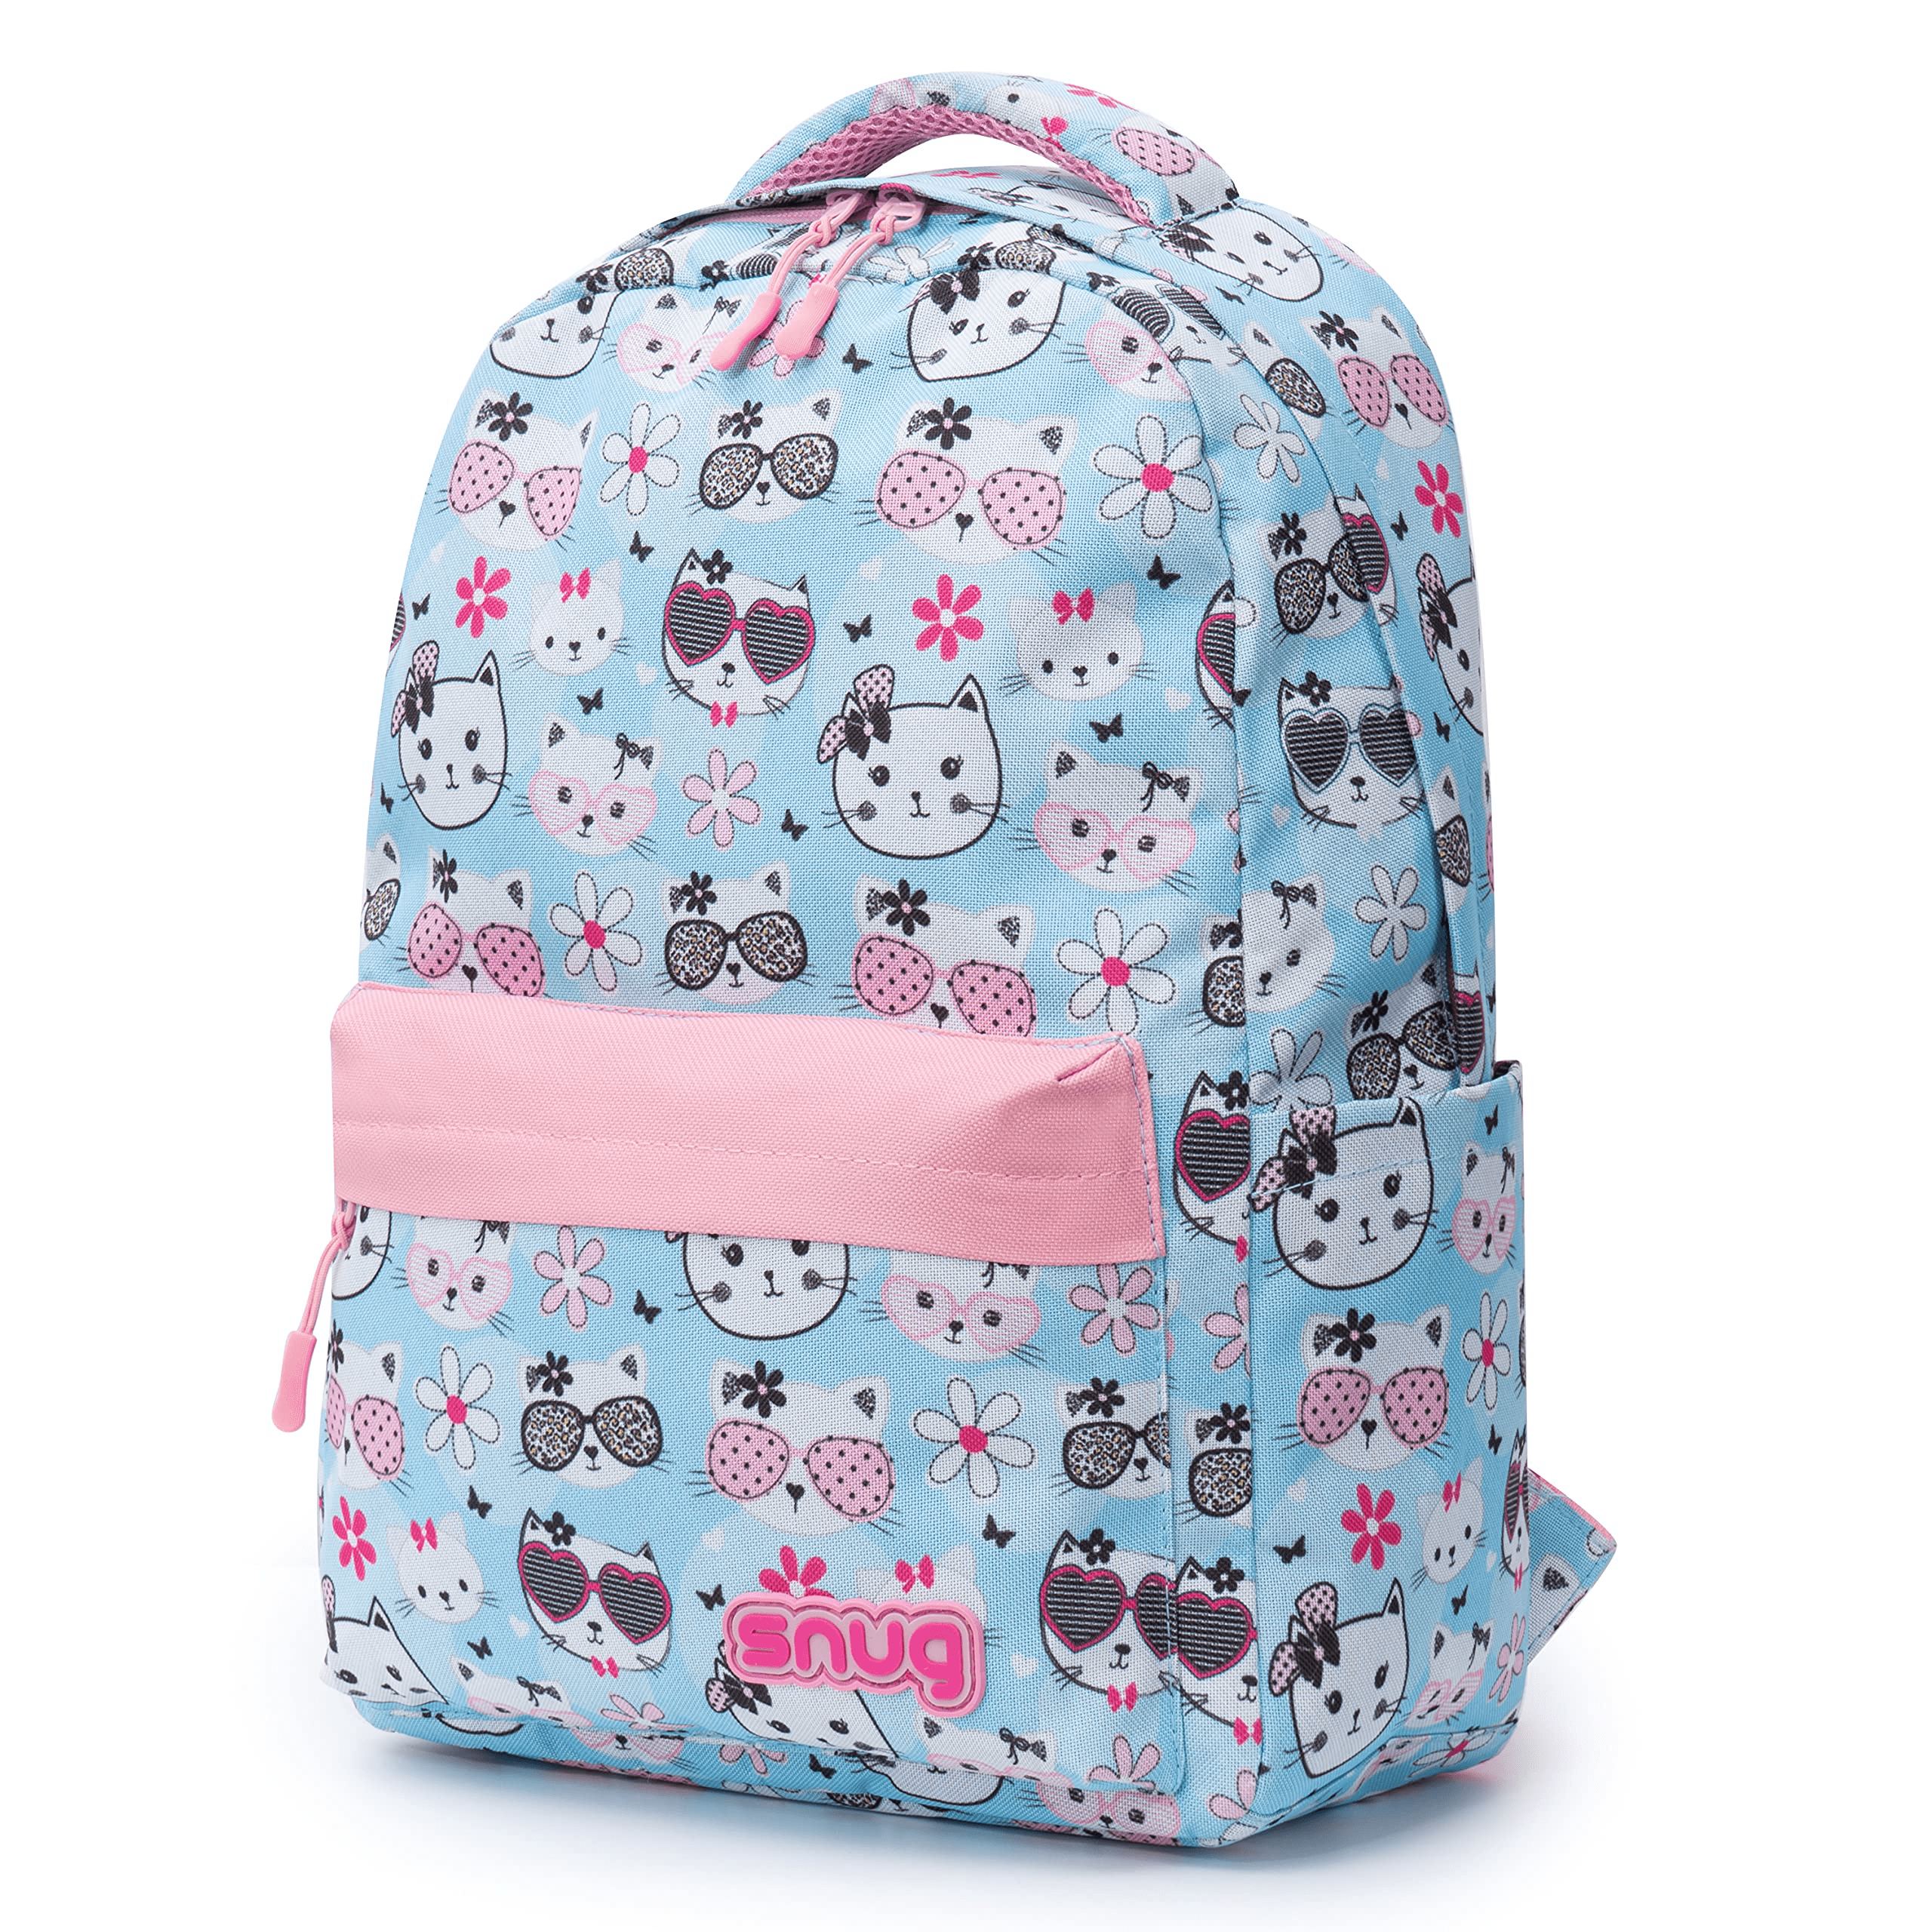 Snug Kids Backpack-1